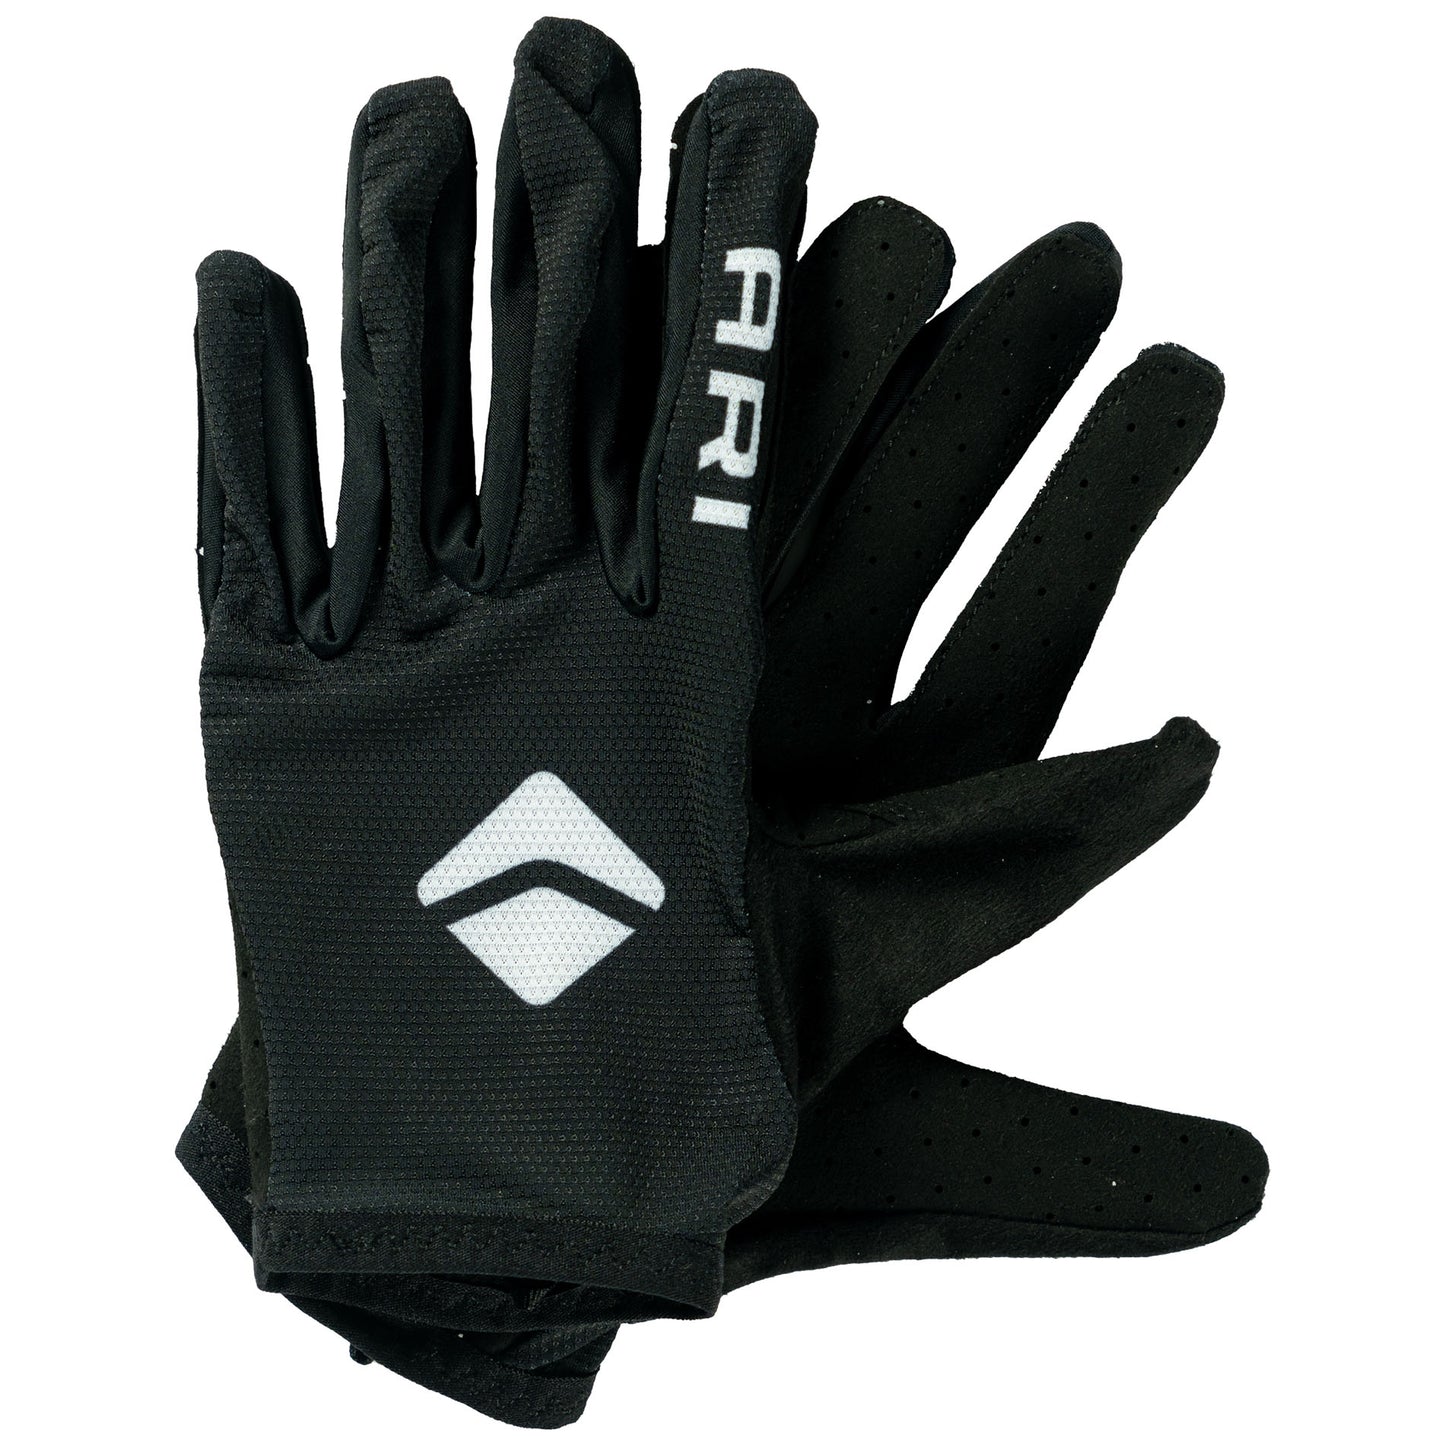 ARI Factory Racing Gloves